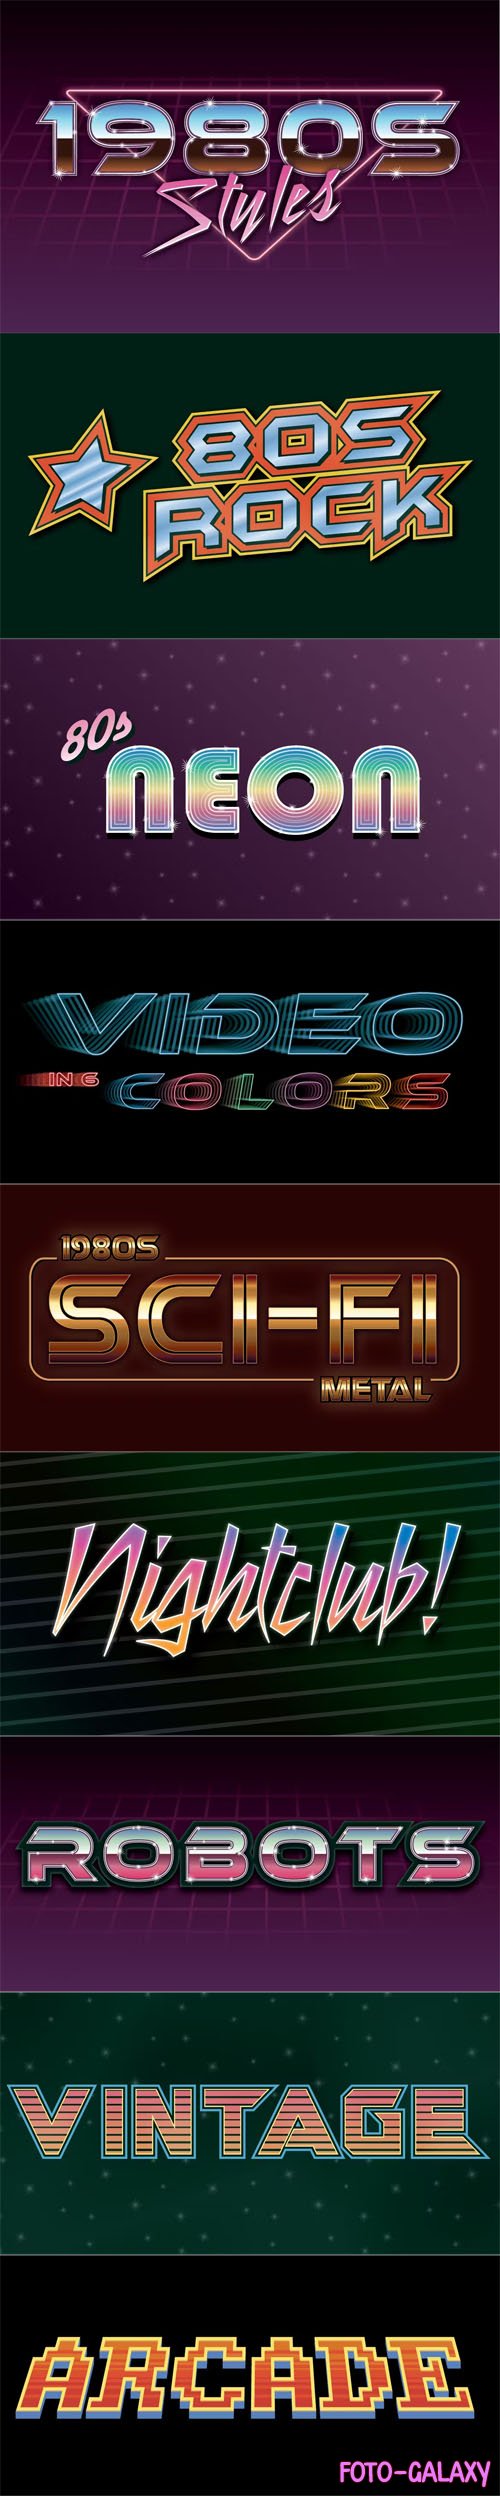 1980s Graphic Styles